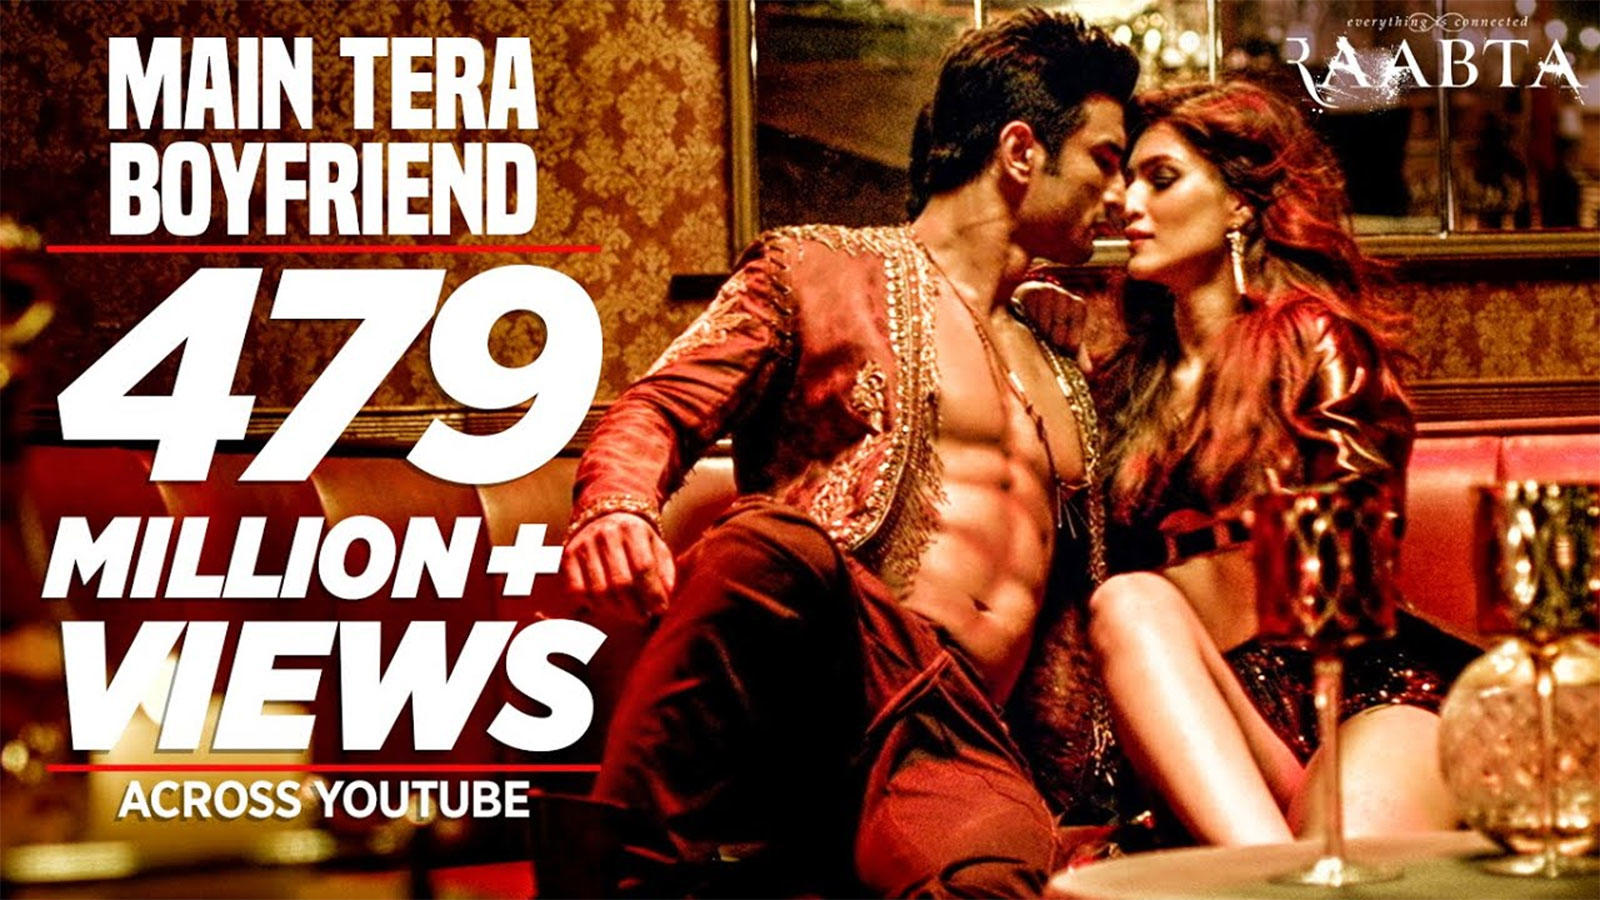 Watch Popular Hindi Music Video Song 'Main Tera Boyfriend' From Movie ' Raabta' Sung By Arijit Singh, Neha Kakkar And Meet Bros | Hindi Video Songs  - Times of India